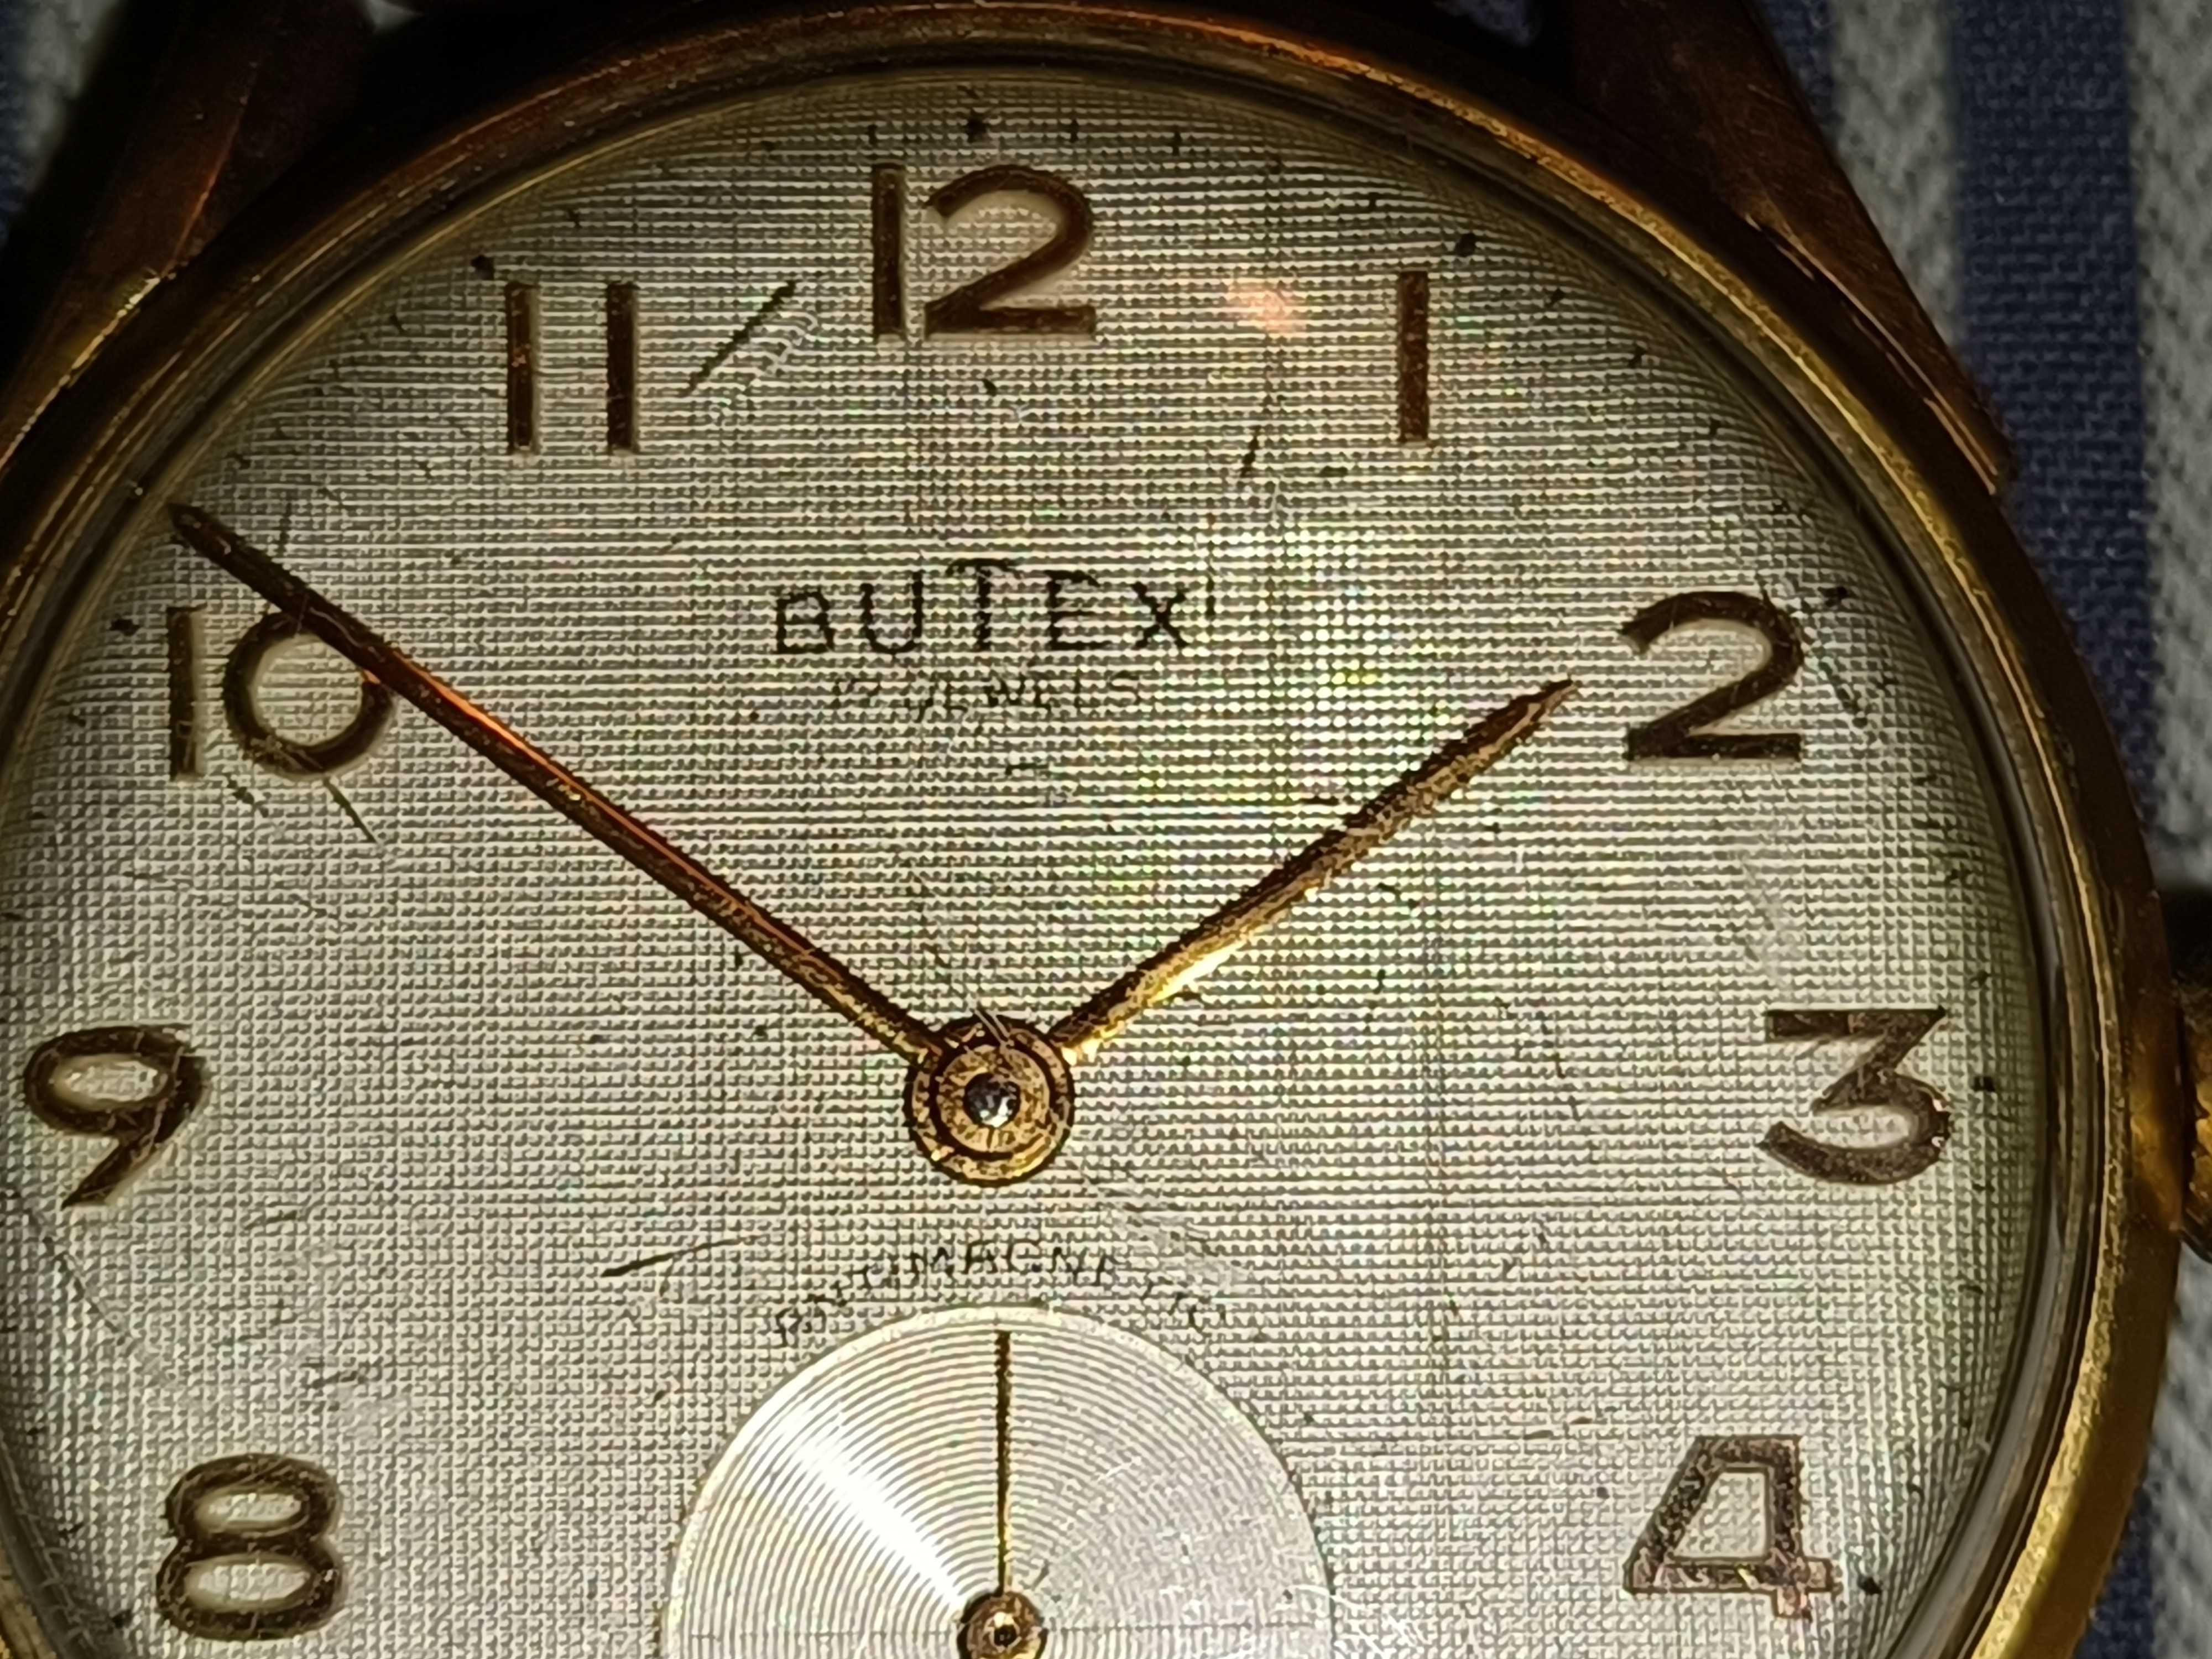 Relógio Butex anos 50 banhado a ouro